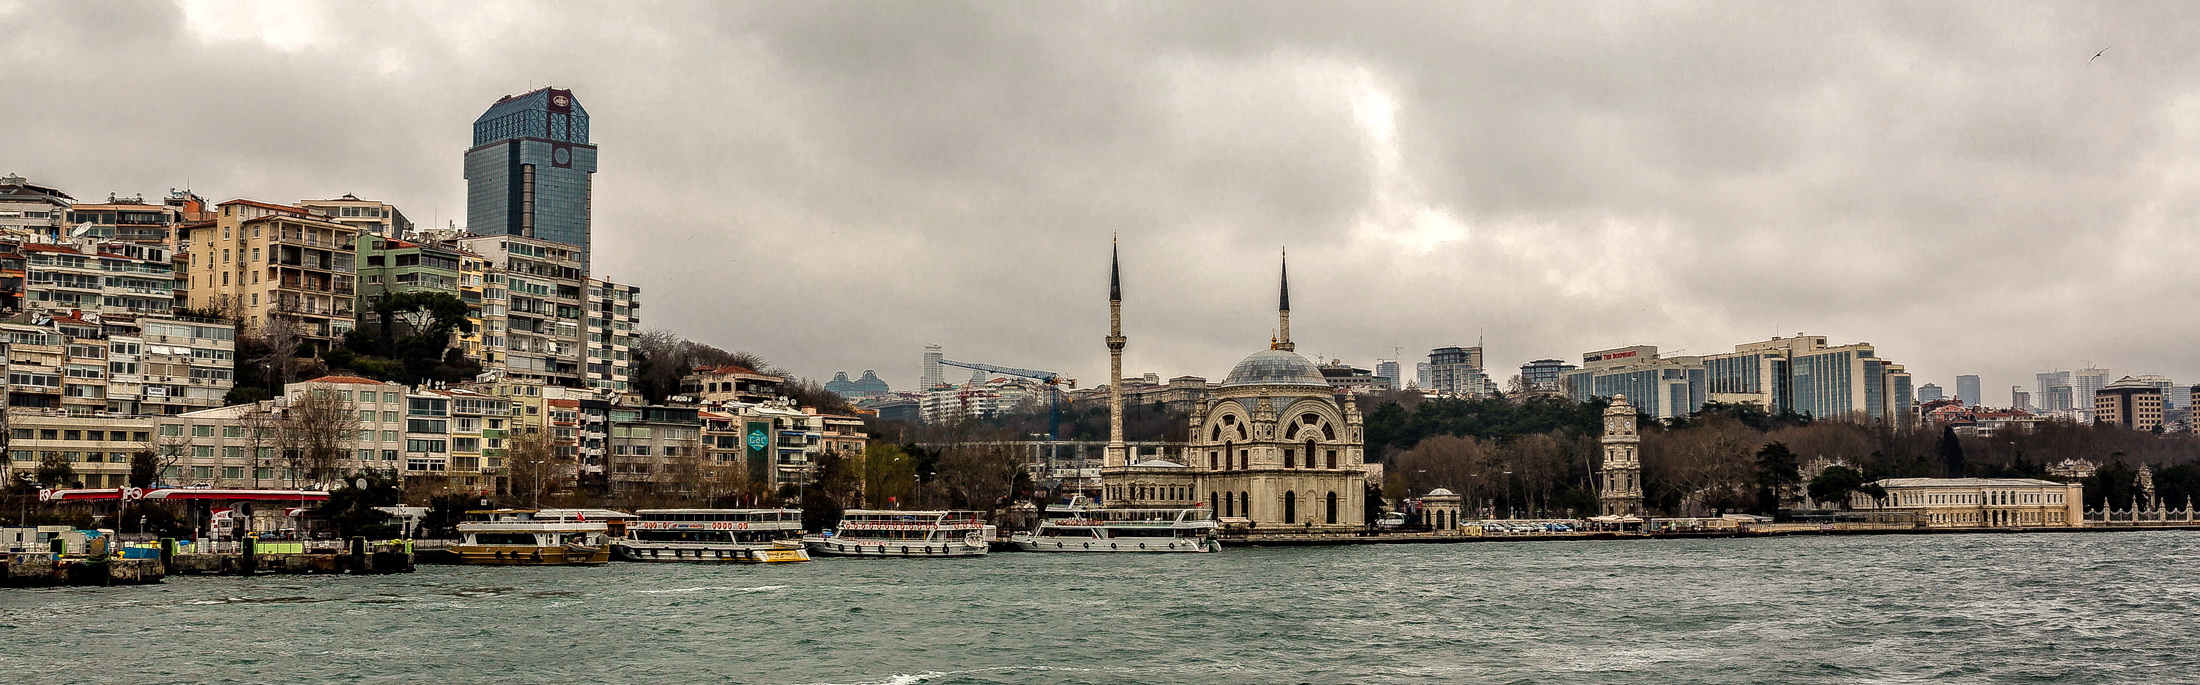 Istanbul 2015 12